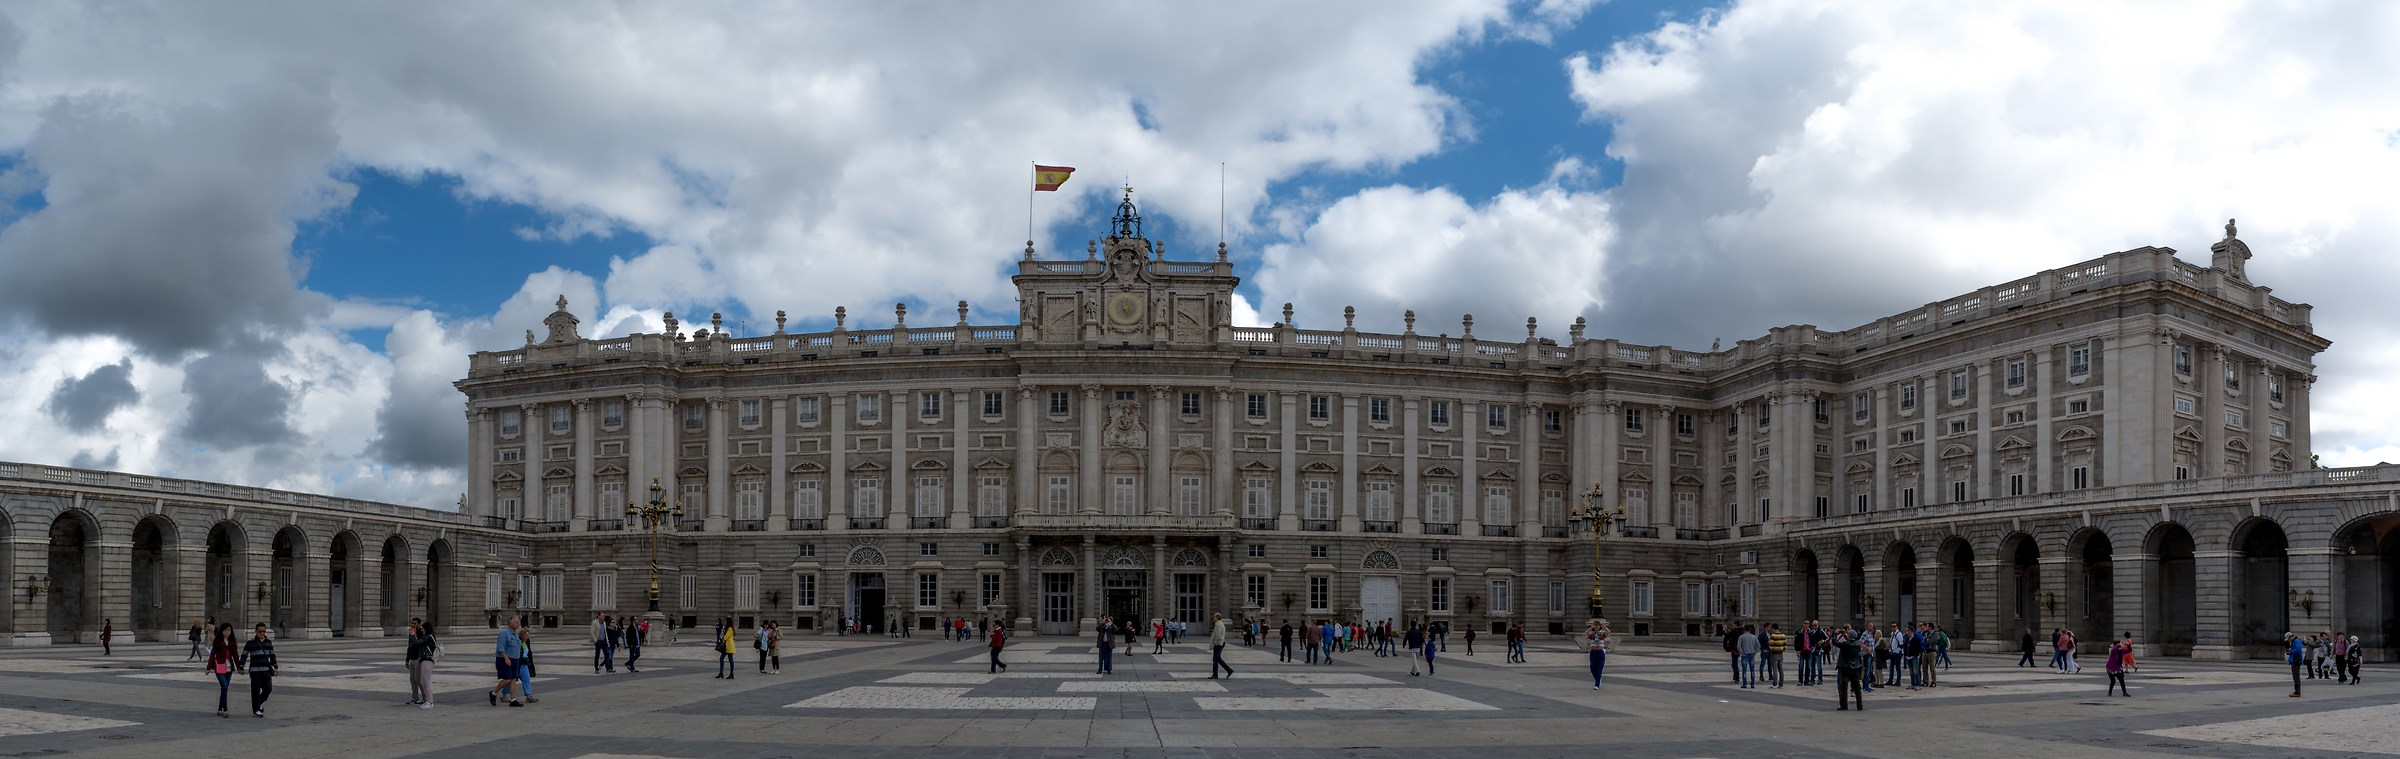 Royal Palace - Madrid...